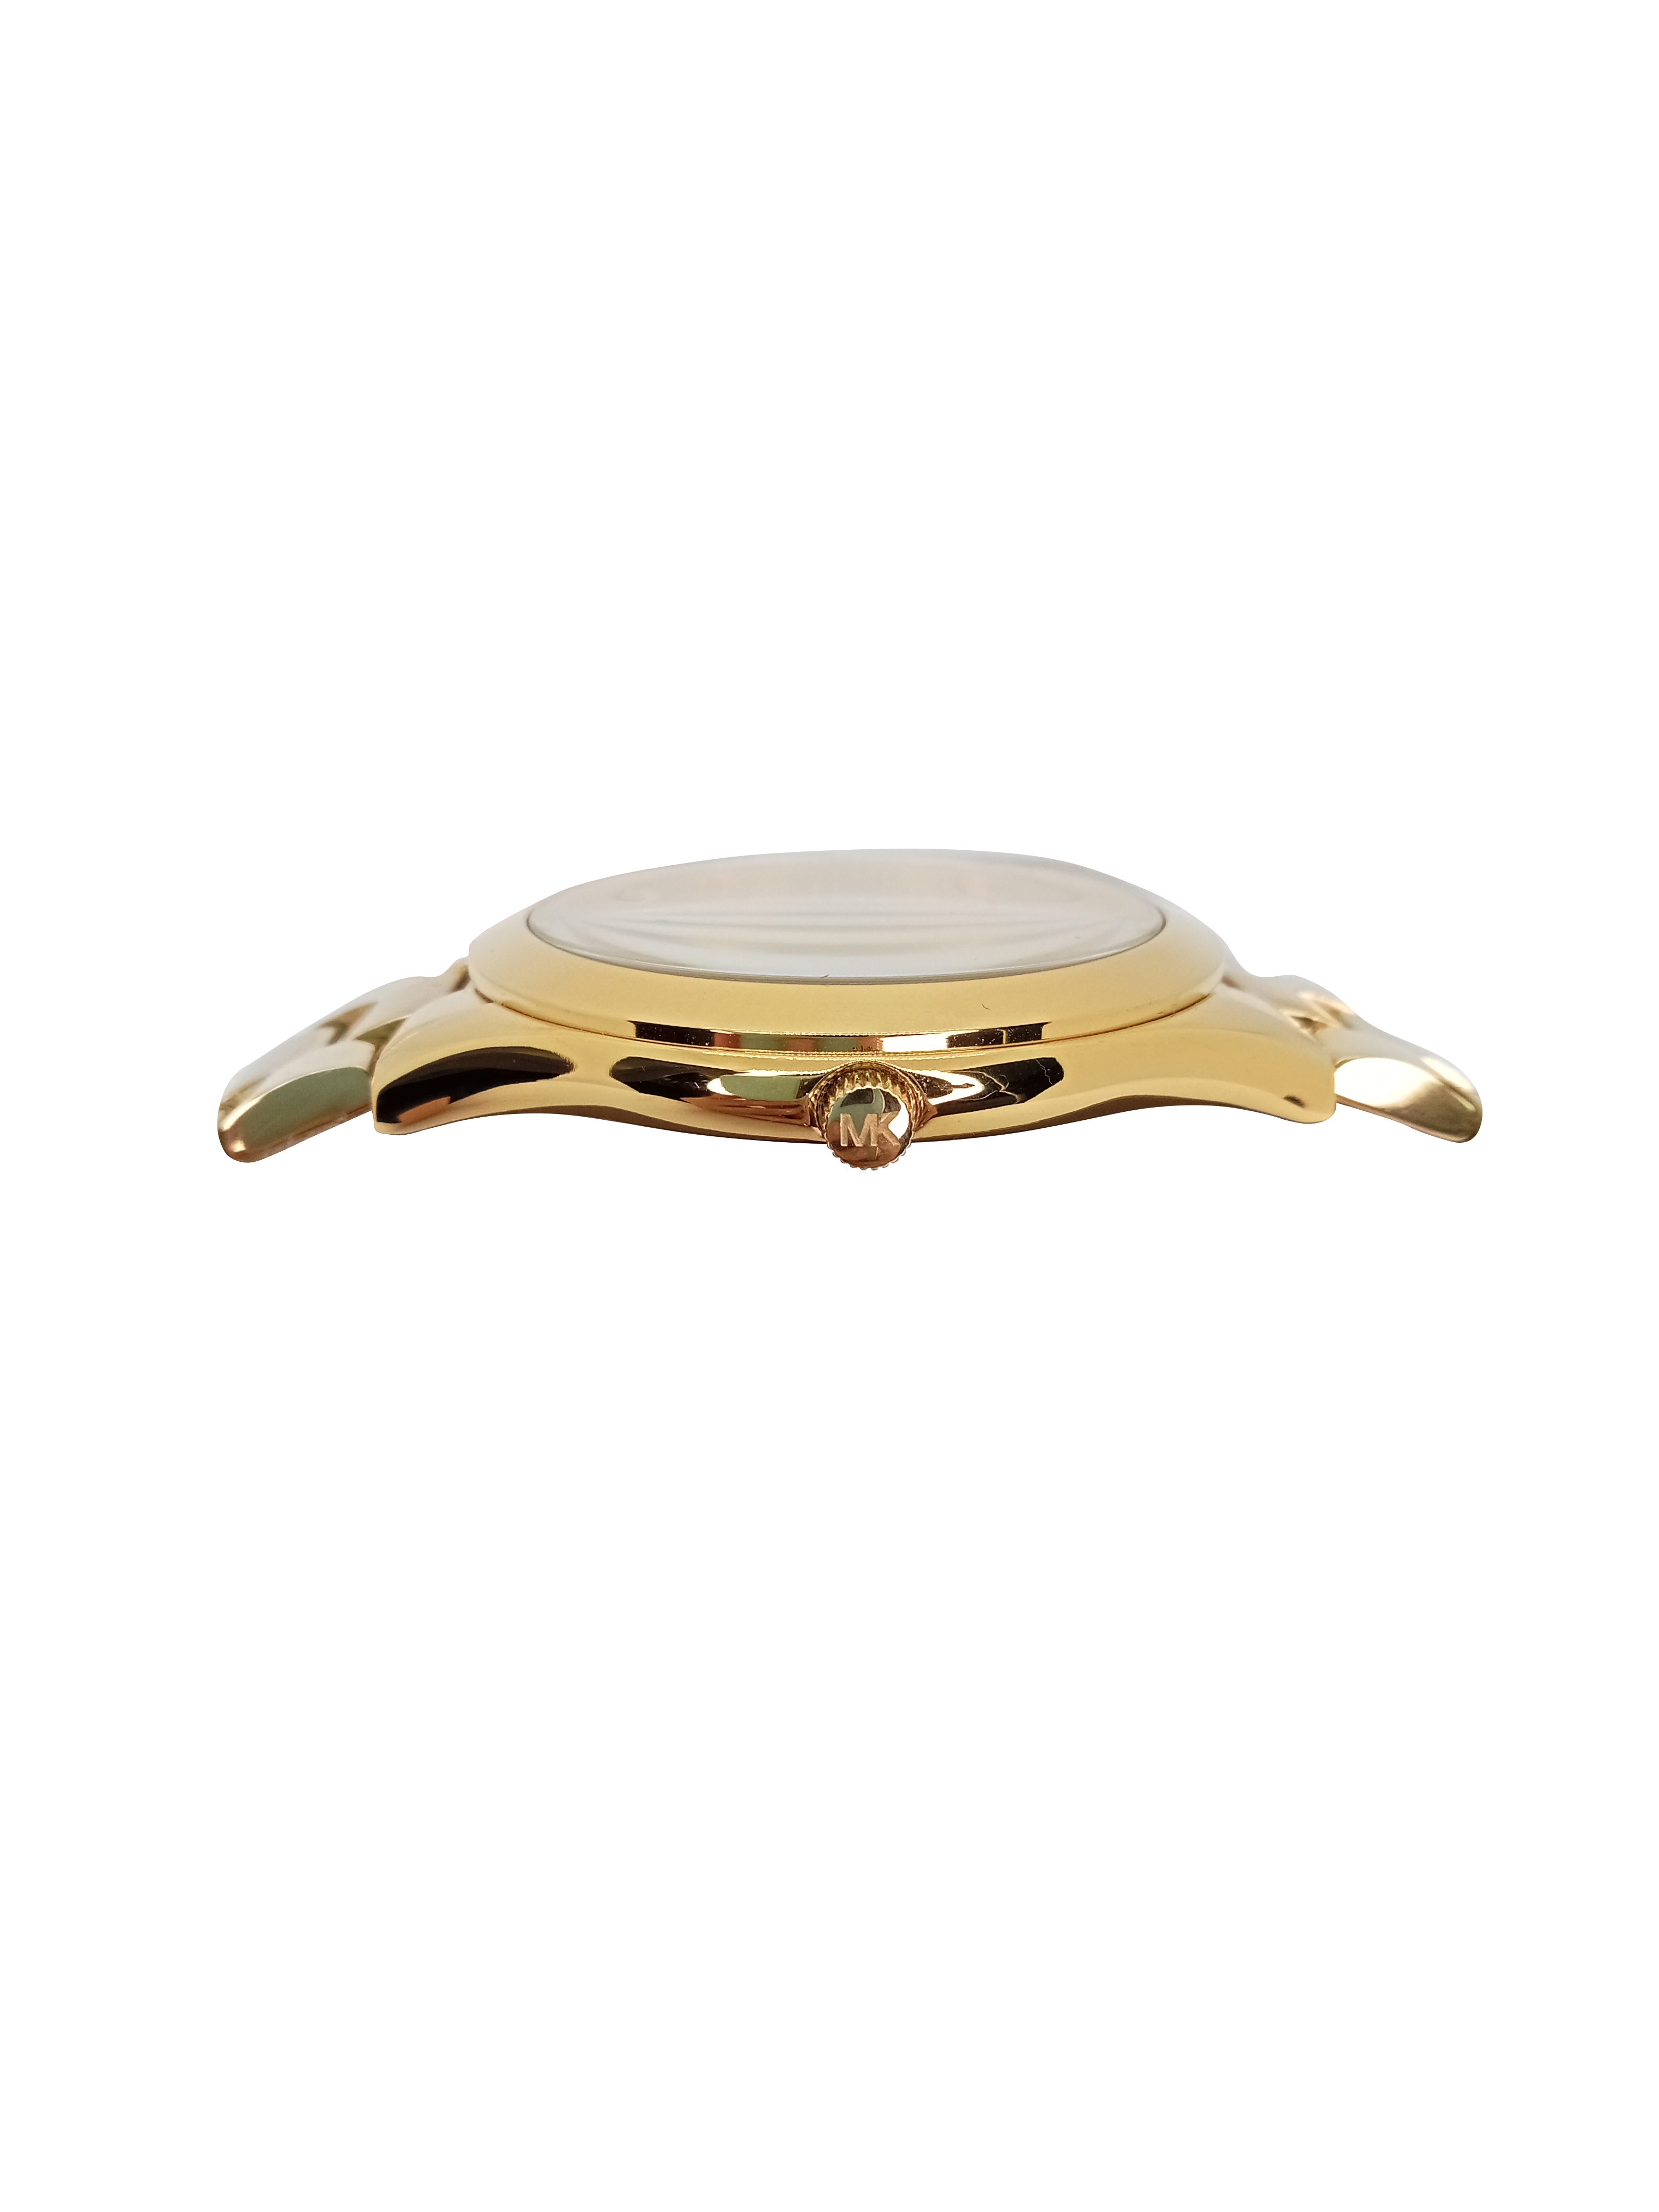 Michael Kors Slim Runway Gold Watch  eBay